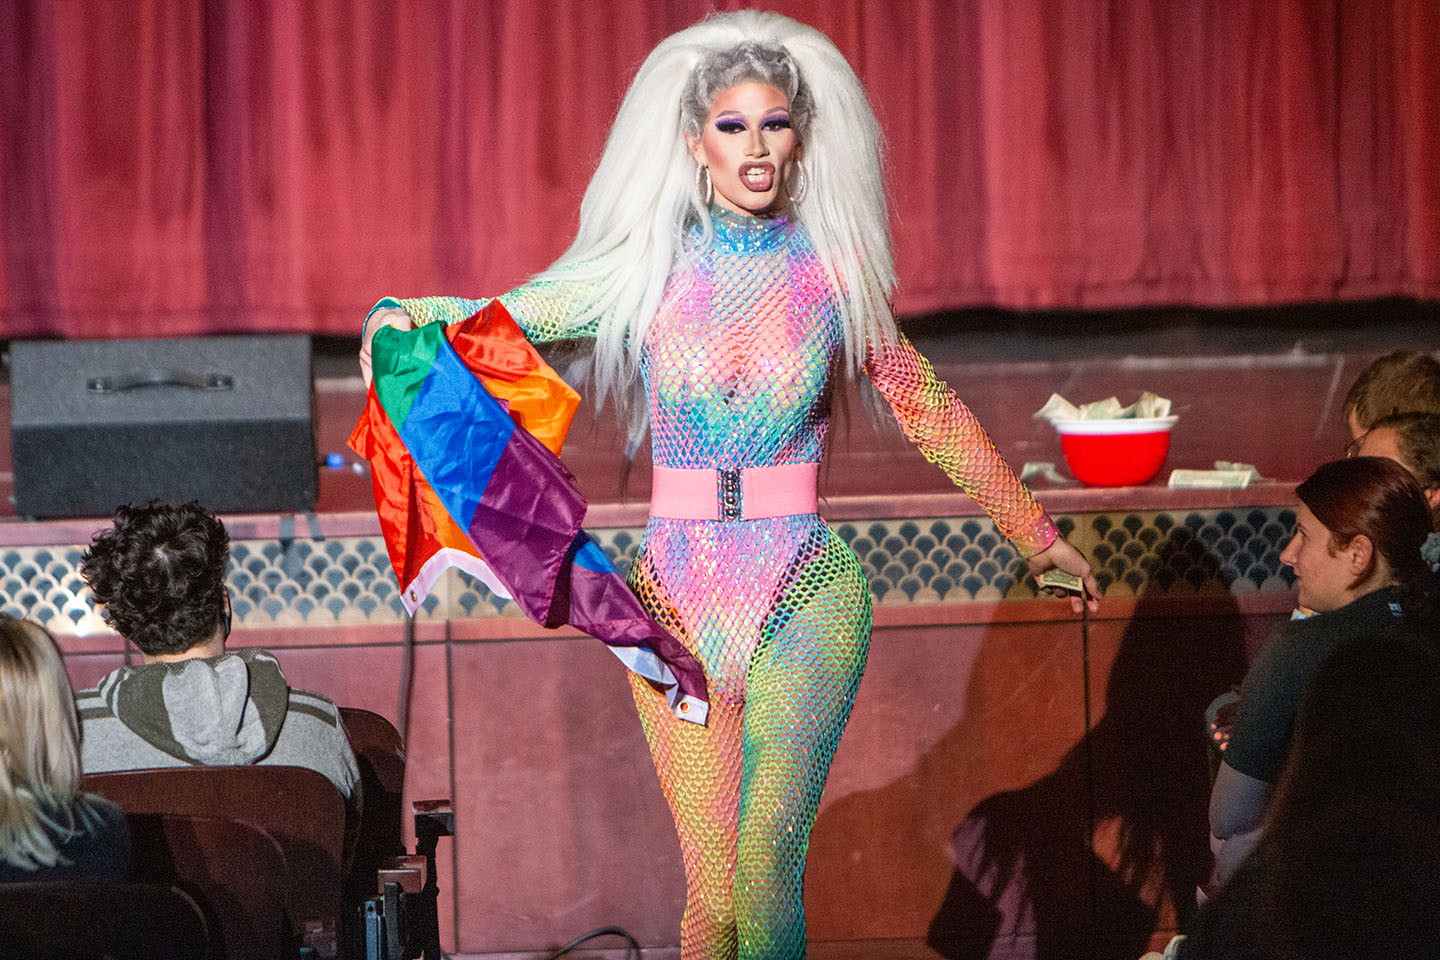 Spectrum hosts Drag Show to celebrate LGBTQ culture